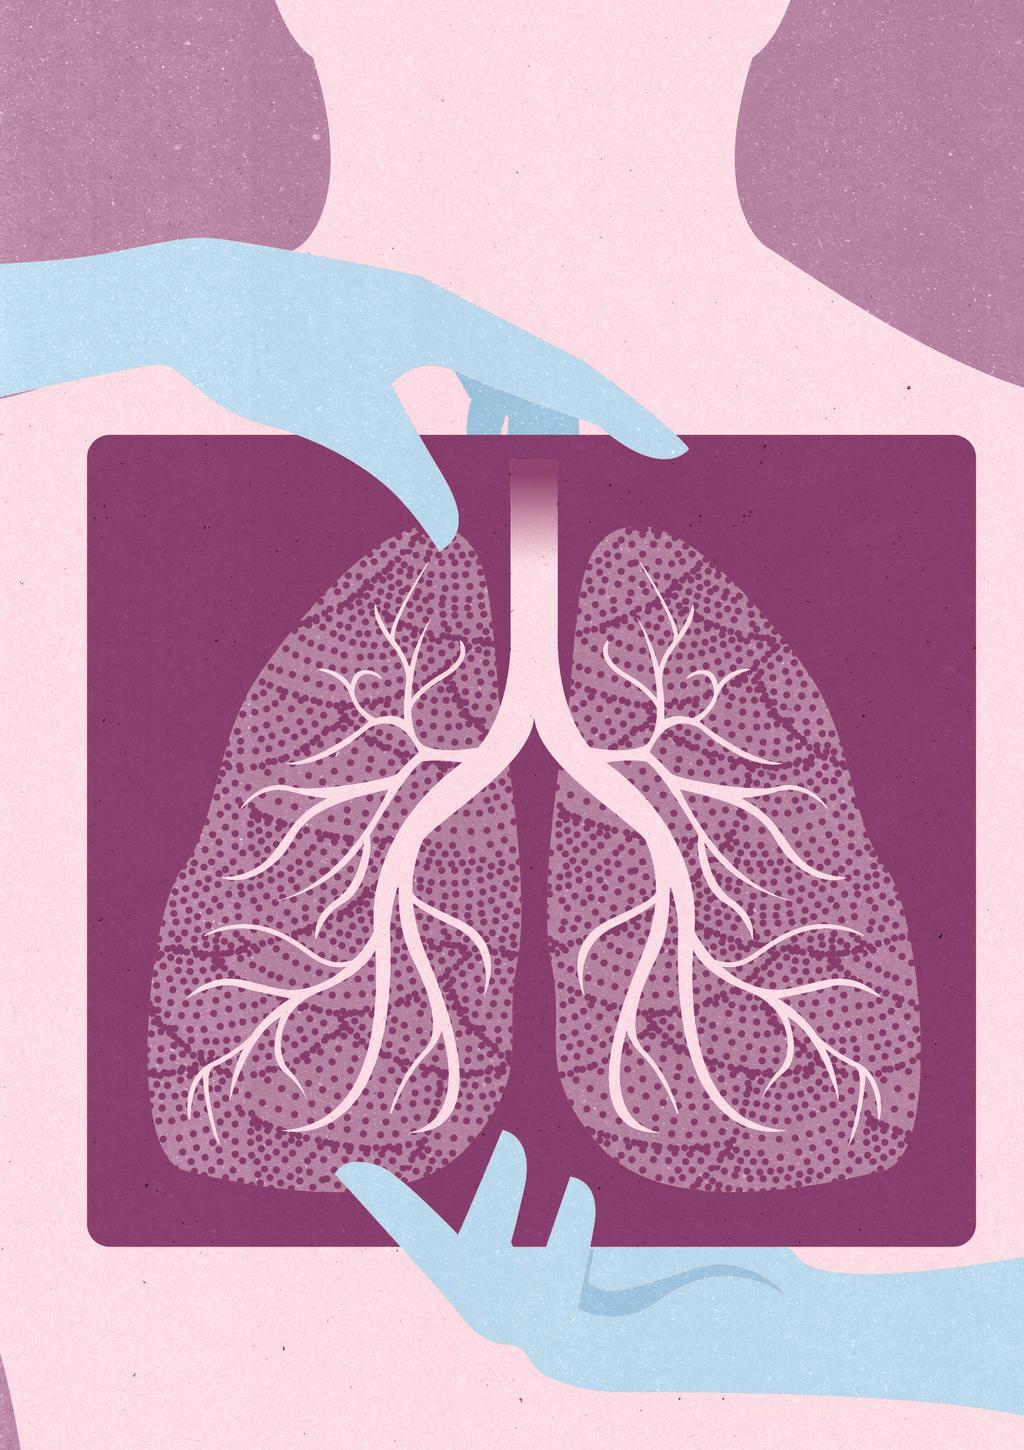 Lungfibros EN SKRIF T OM LUNGFIBROS